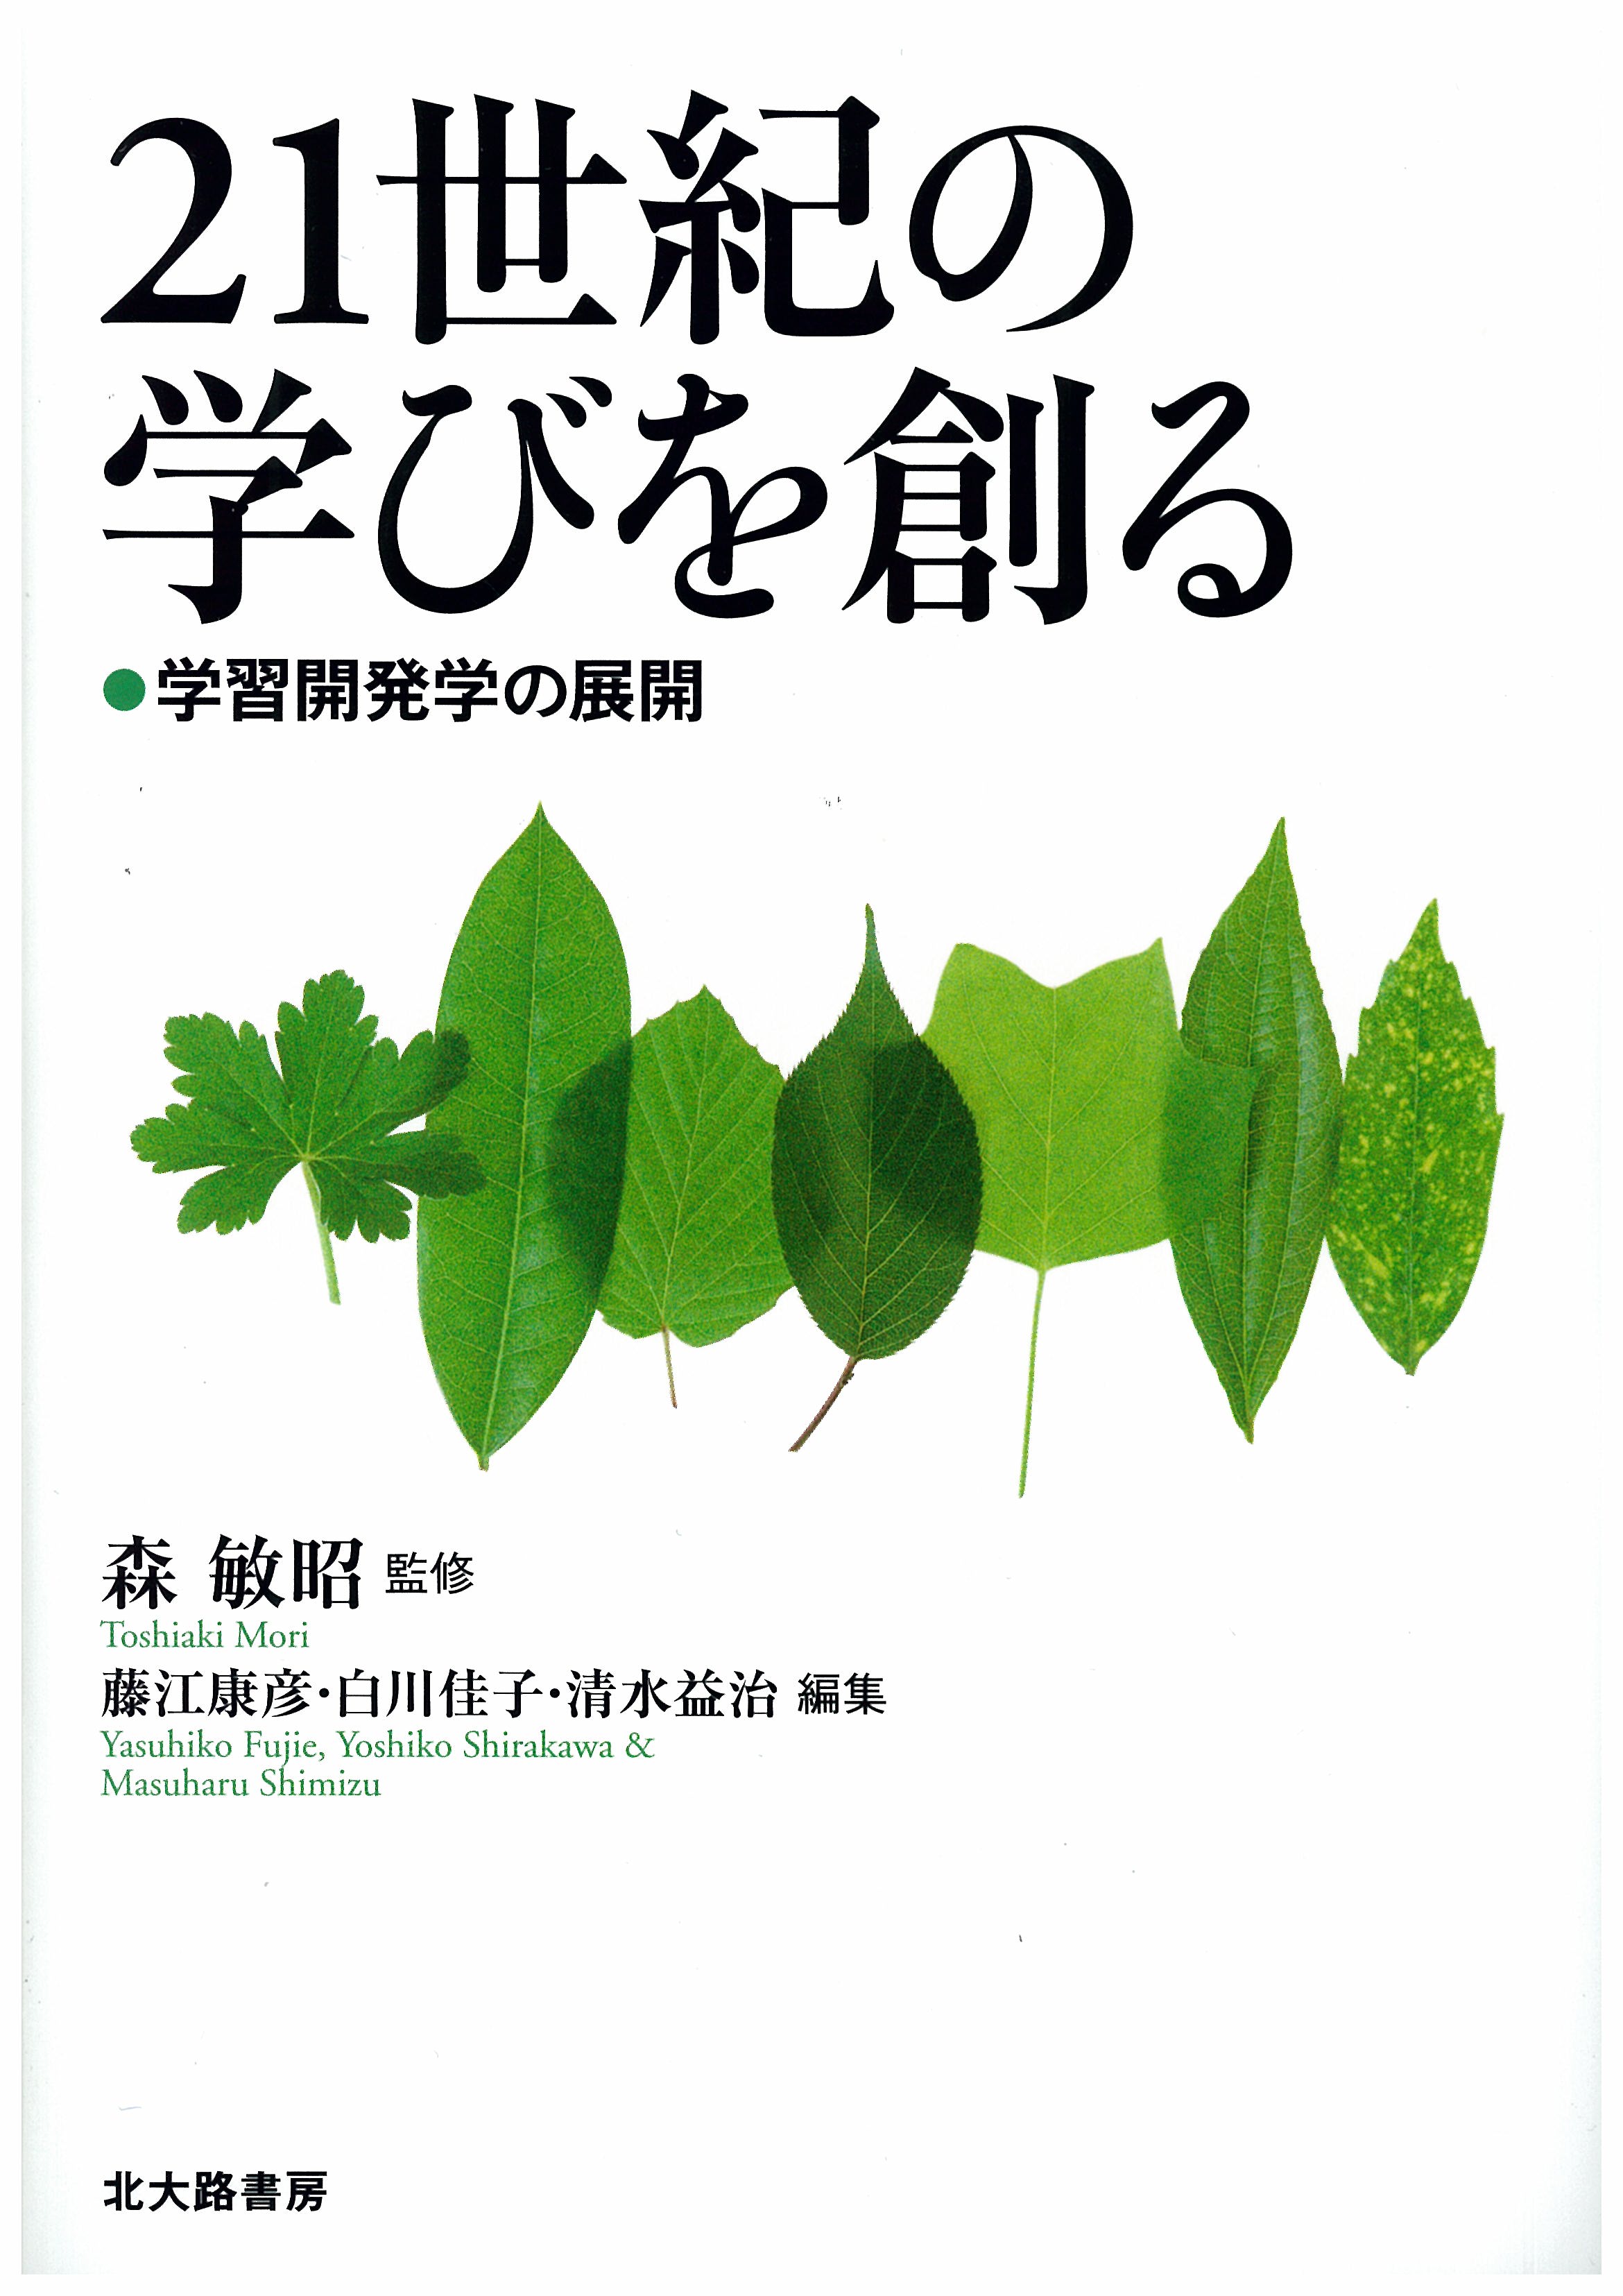 illustration of seven green leaves